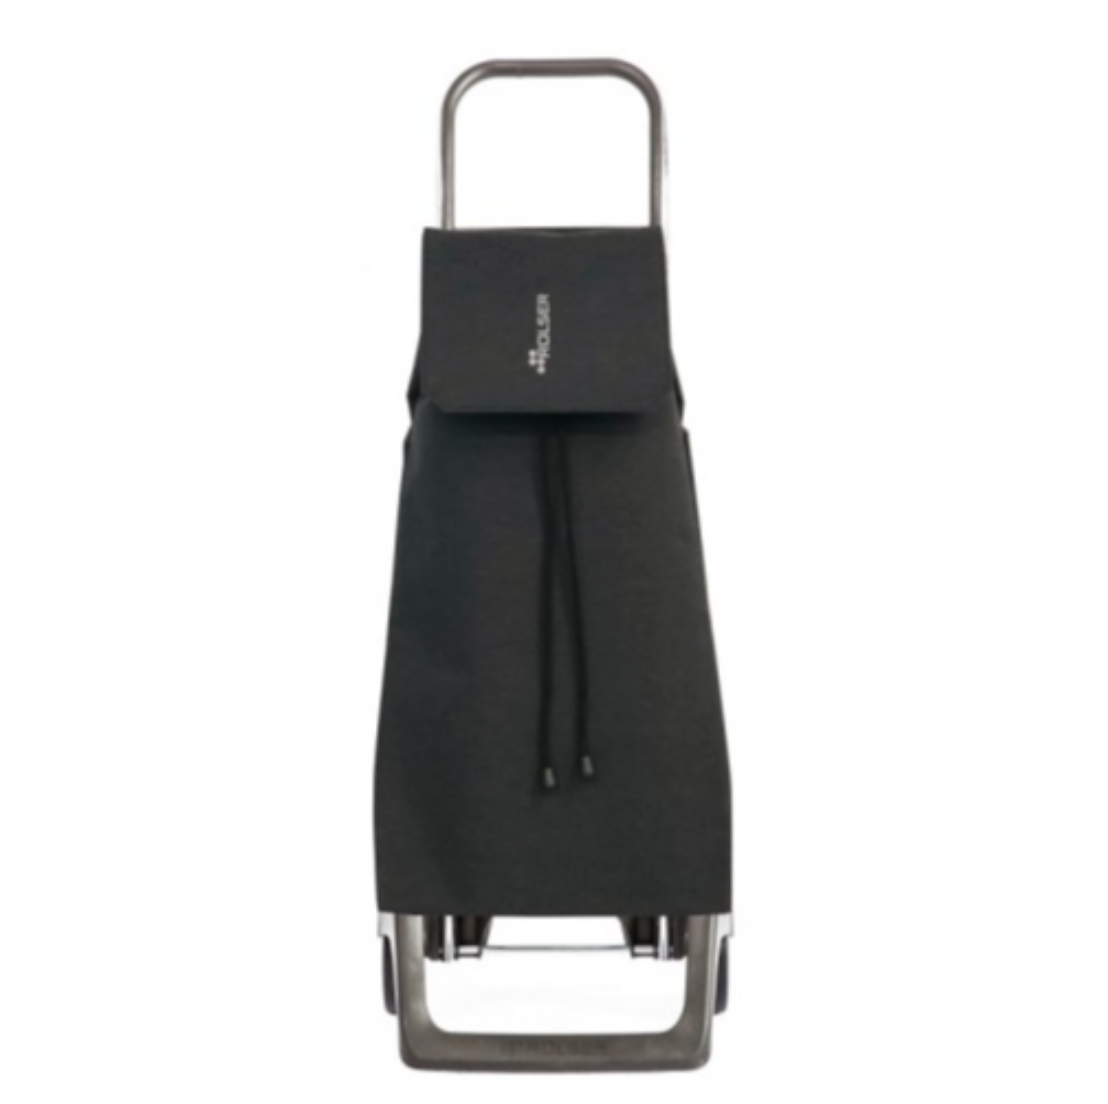 Rolser Aluminum Shopping Trolley Bag – Holds 88lb. – Black Tweed